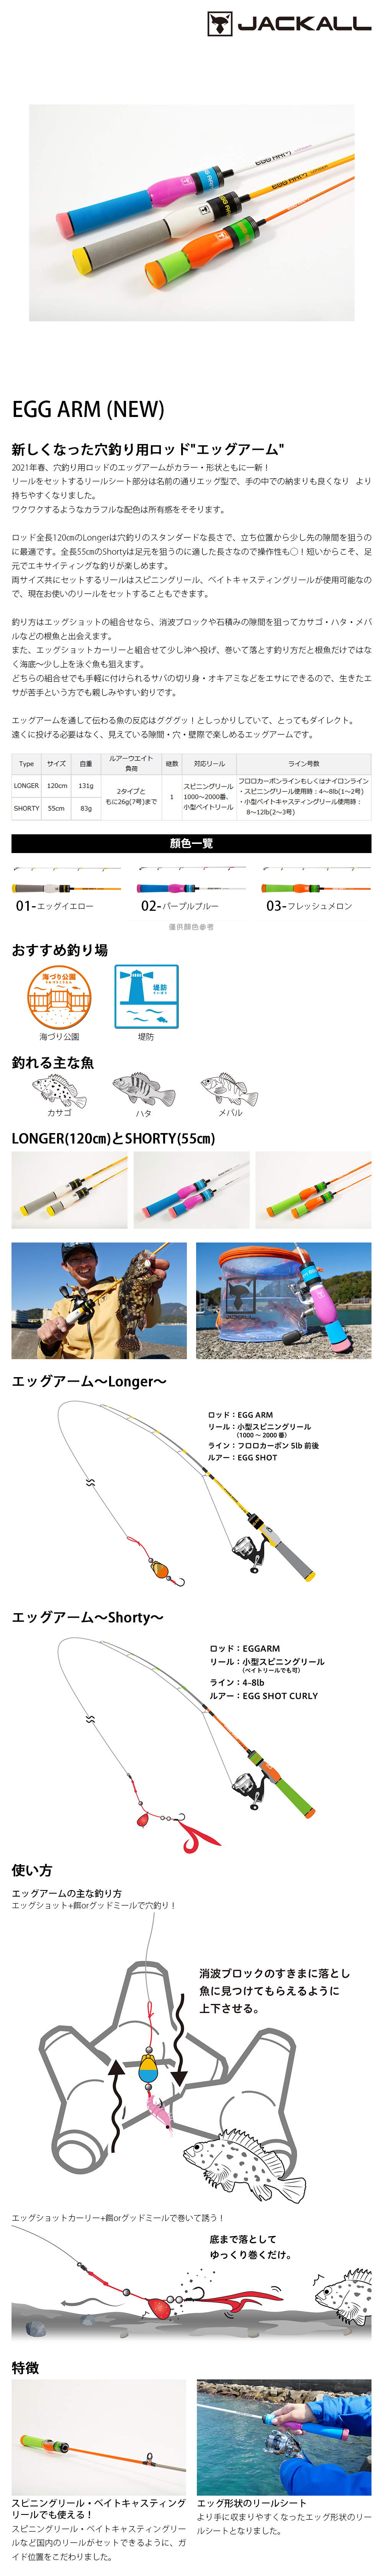 JACKALL NEW EGG ARM LONGER [穴釣] [根魚竿] - 漁拓釣具官方線上購物平台